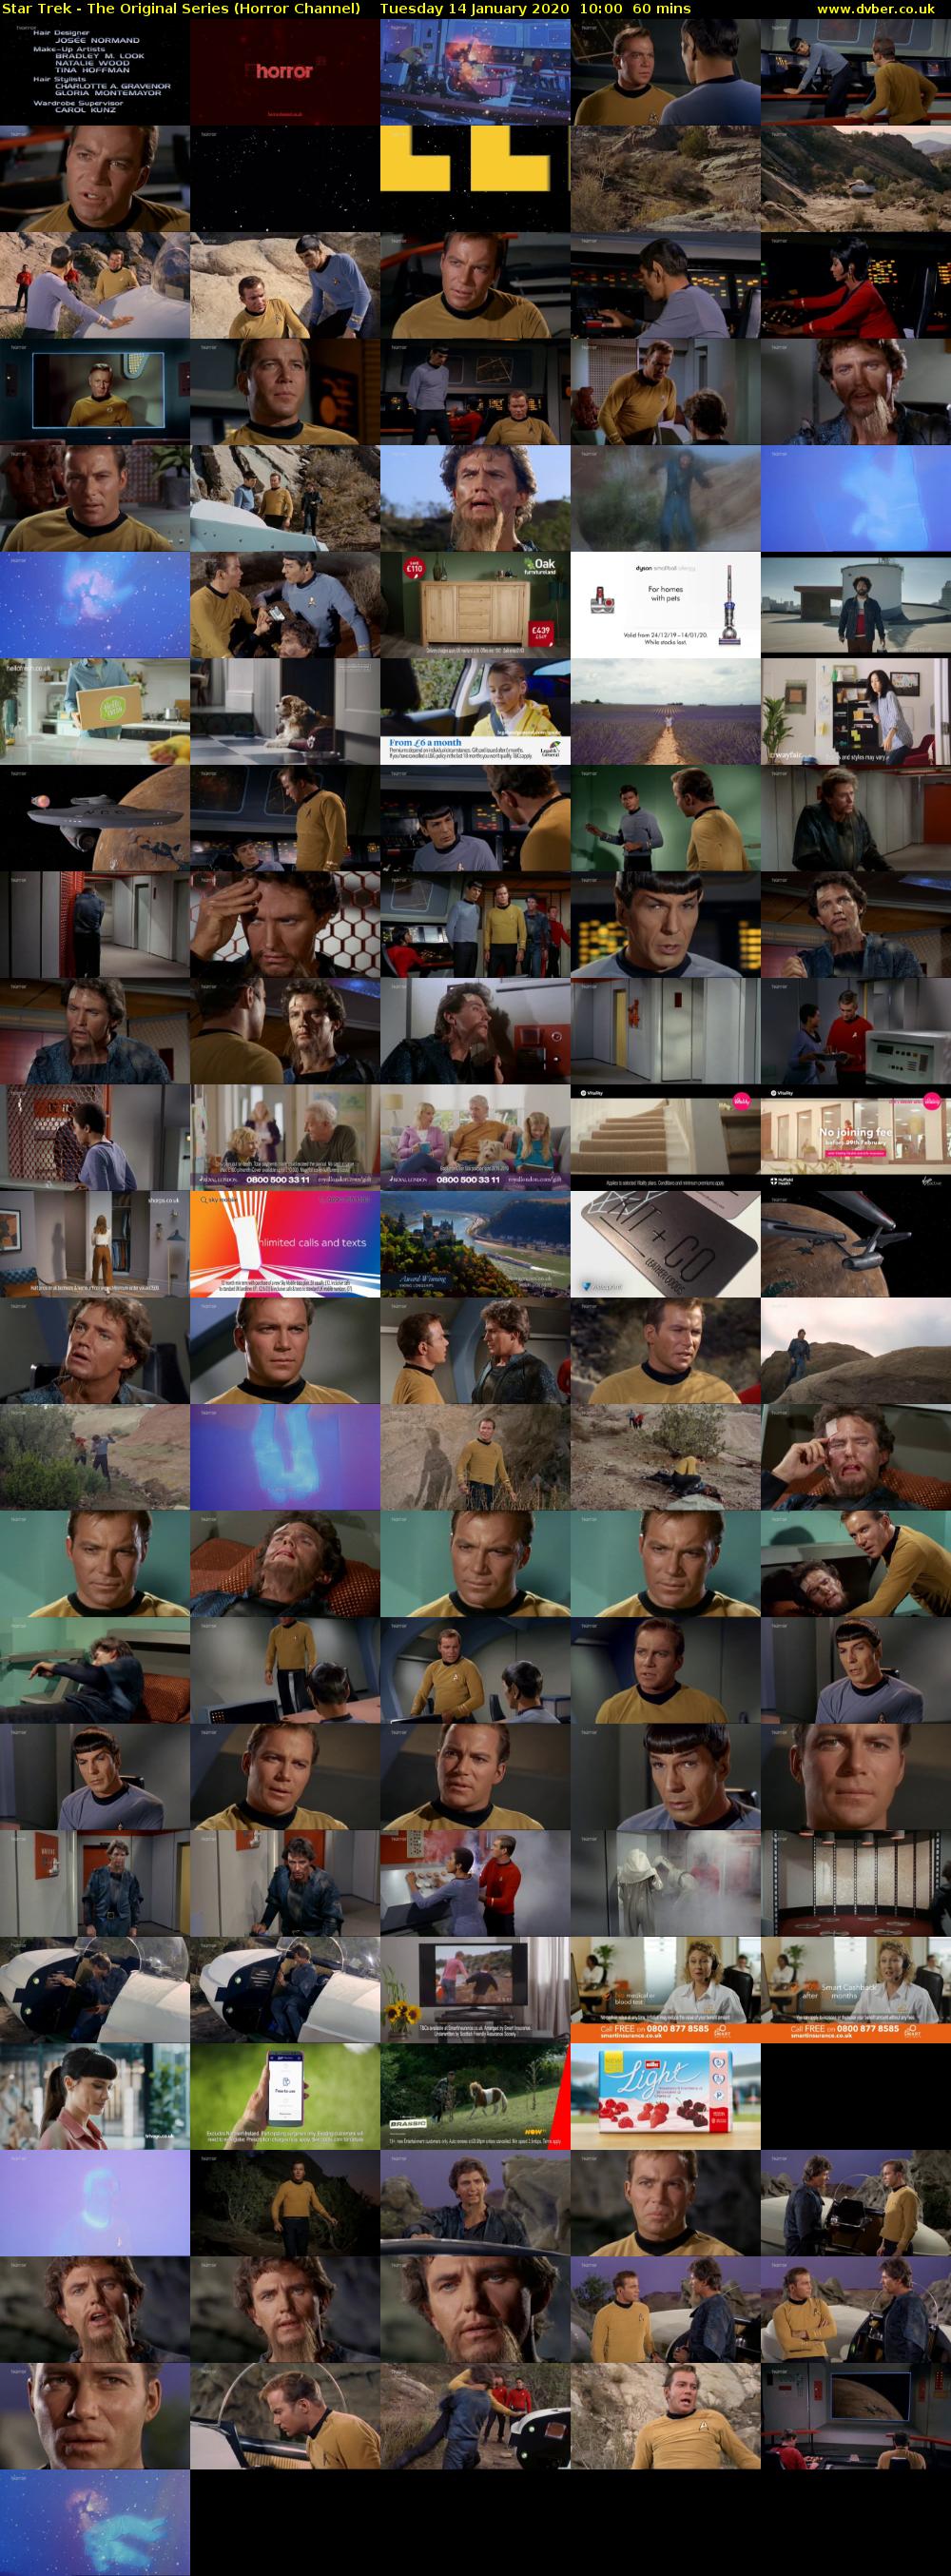 Star Trek - The Original Series (Horror Channel) Tuesday 14 January 2020 10:00 - 11:00